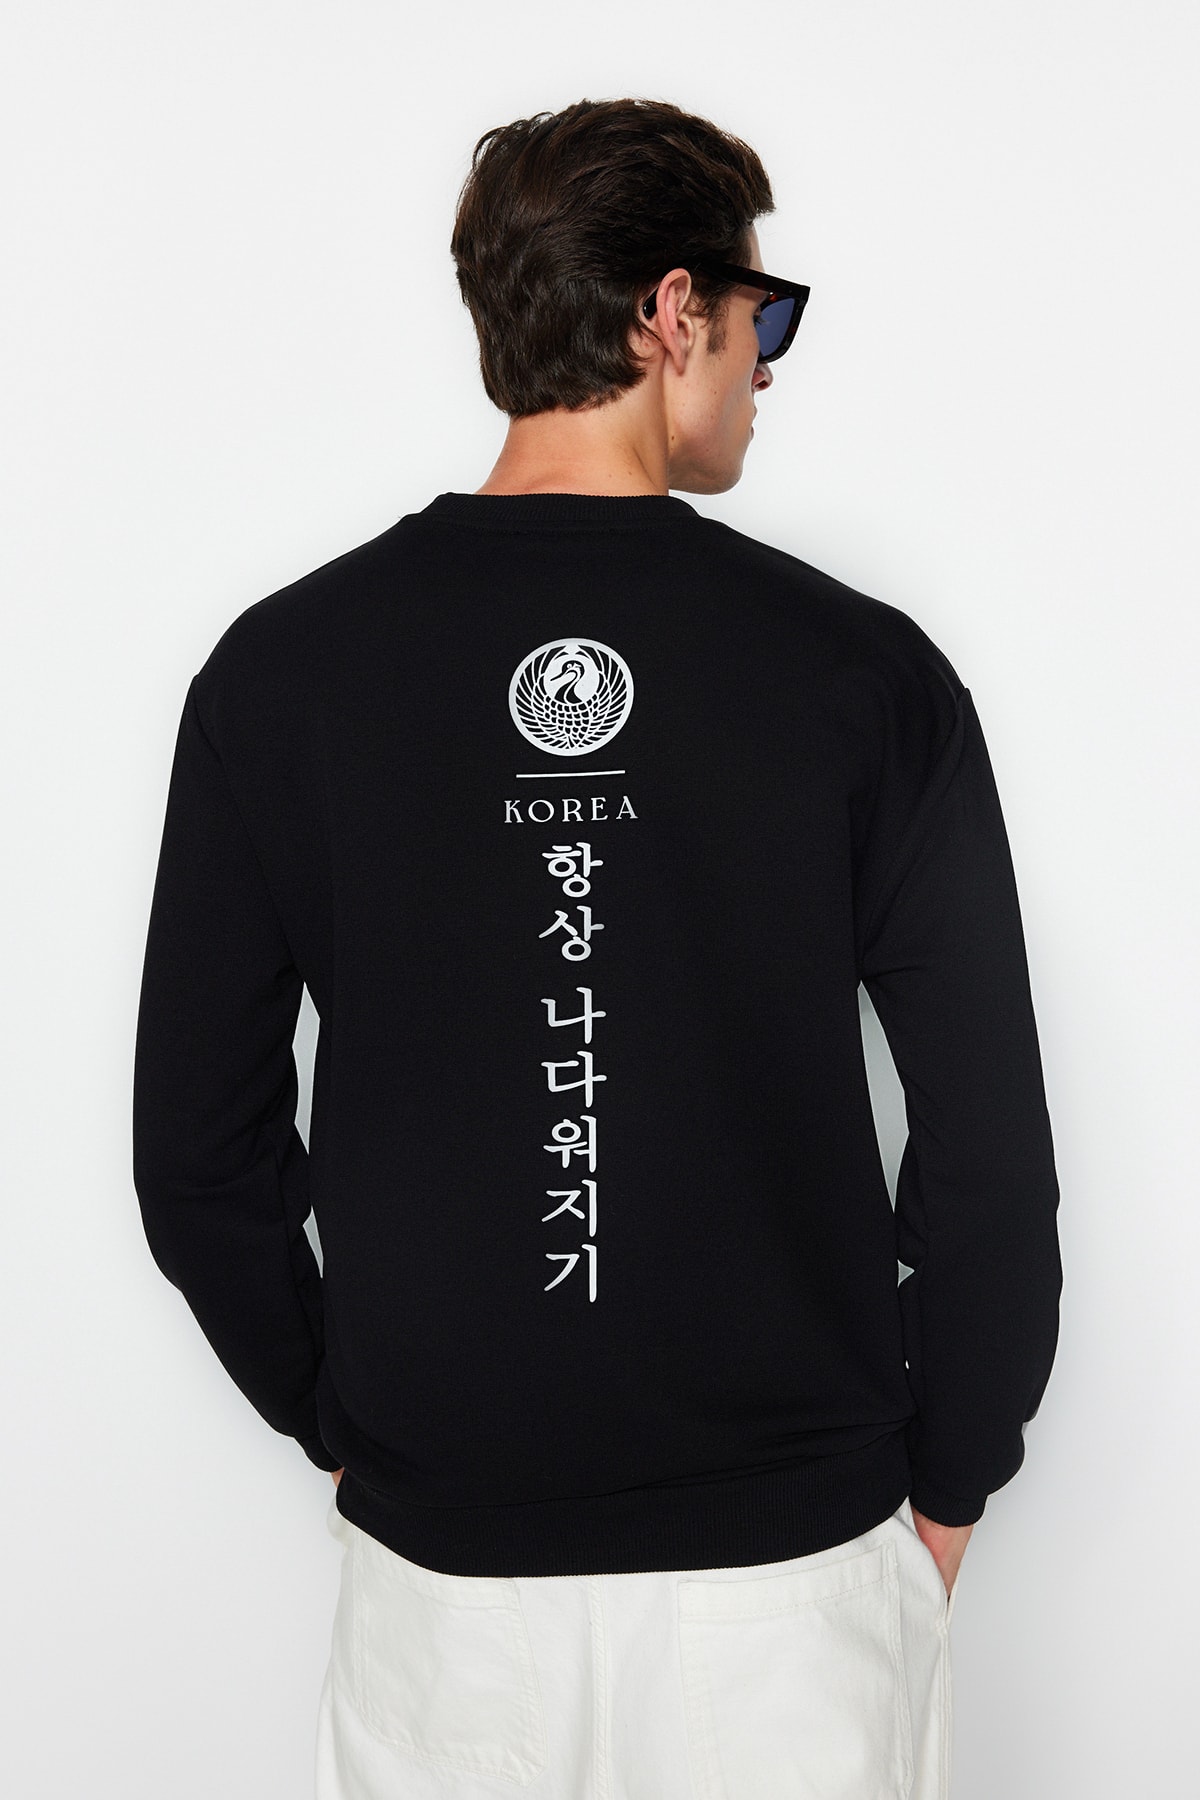 Trendyol Black Men's Relaxed/Comfortable cut, Far Eastern Printed Cotton Sweatshirt.